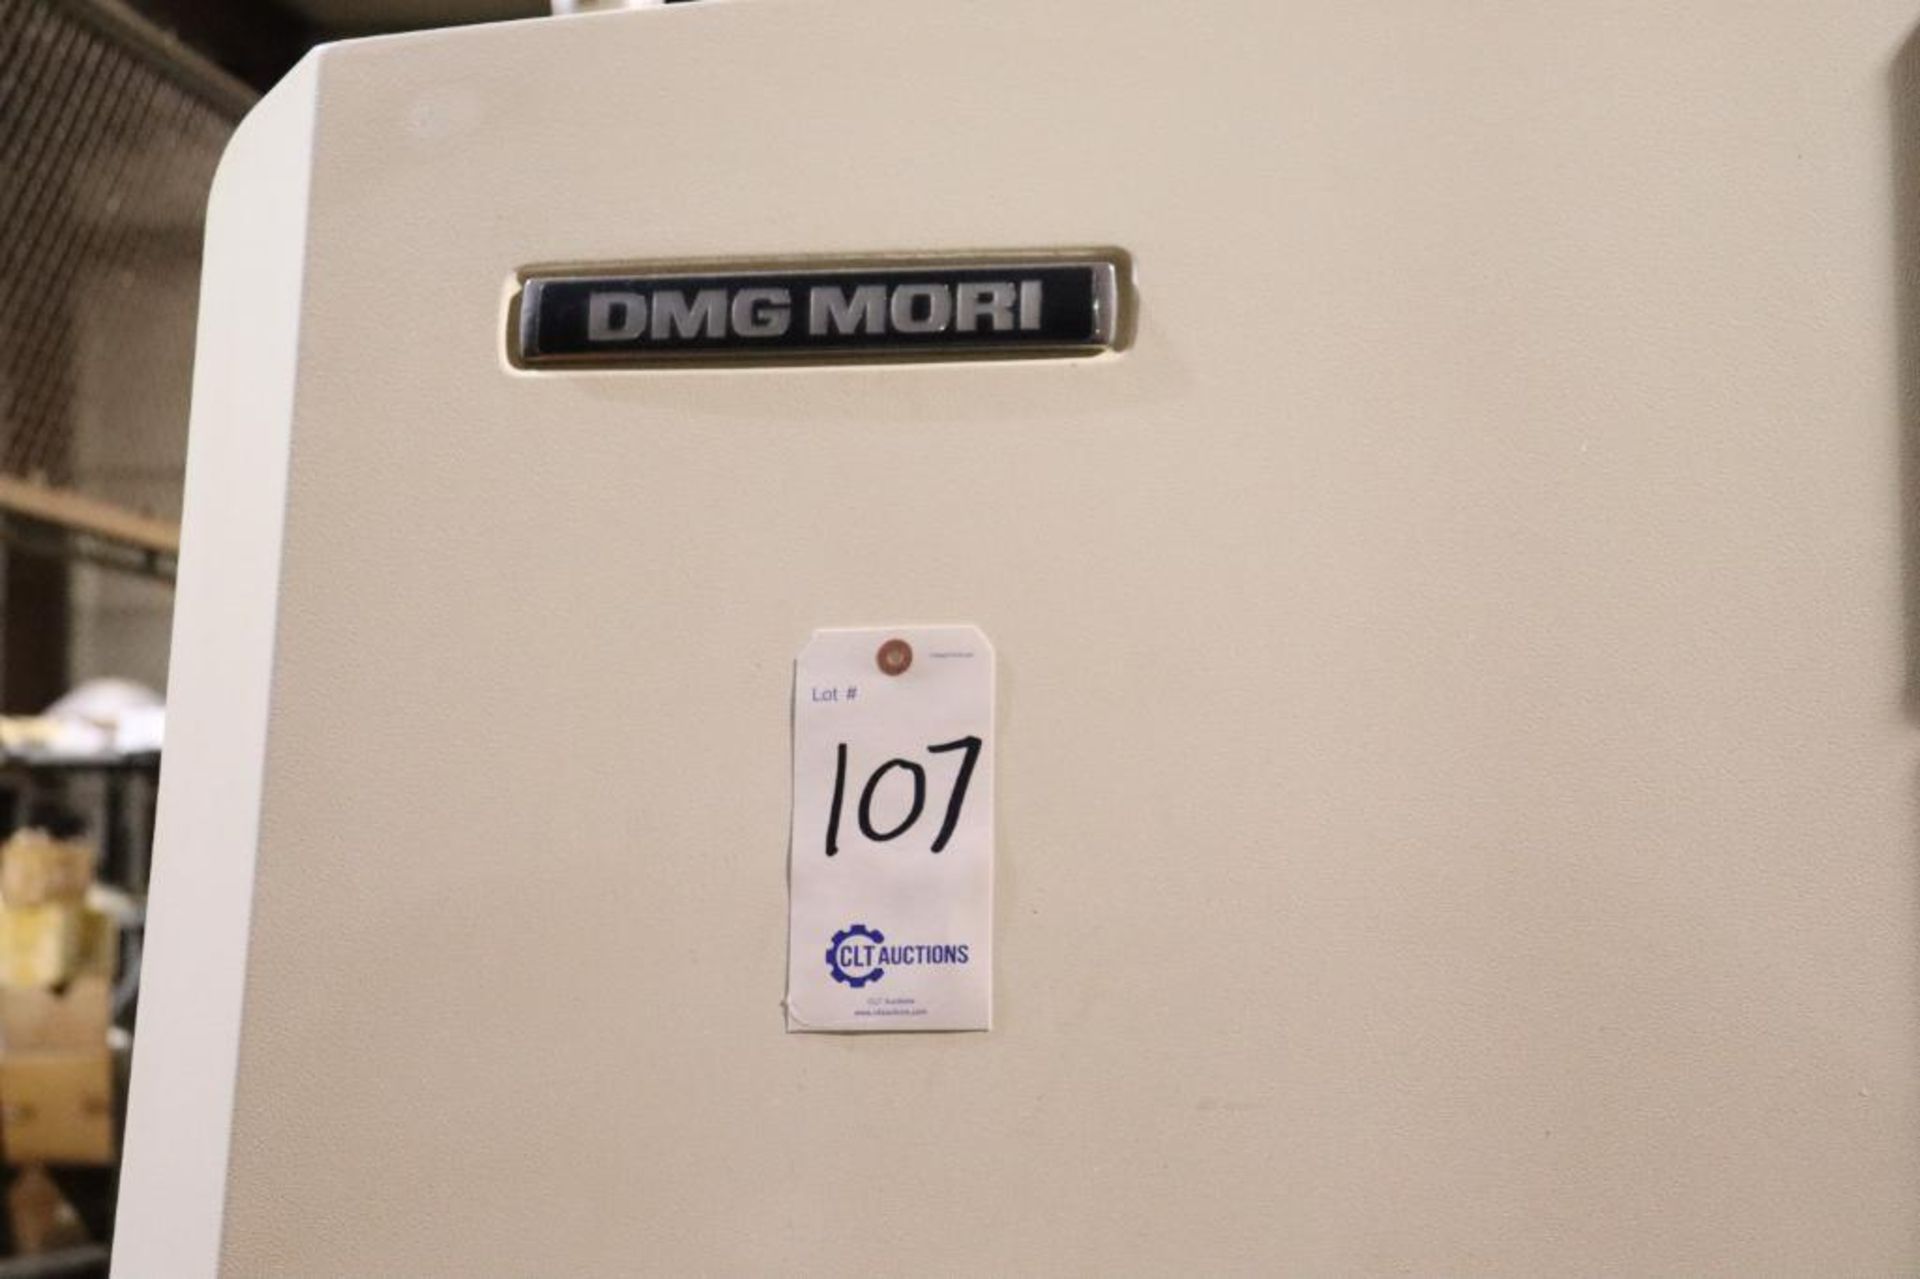 DMG Mori ecoTurn 450 V1 CNC turning center 2015 - Image 5 of 26